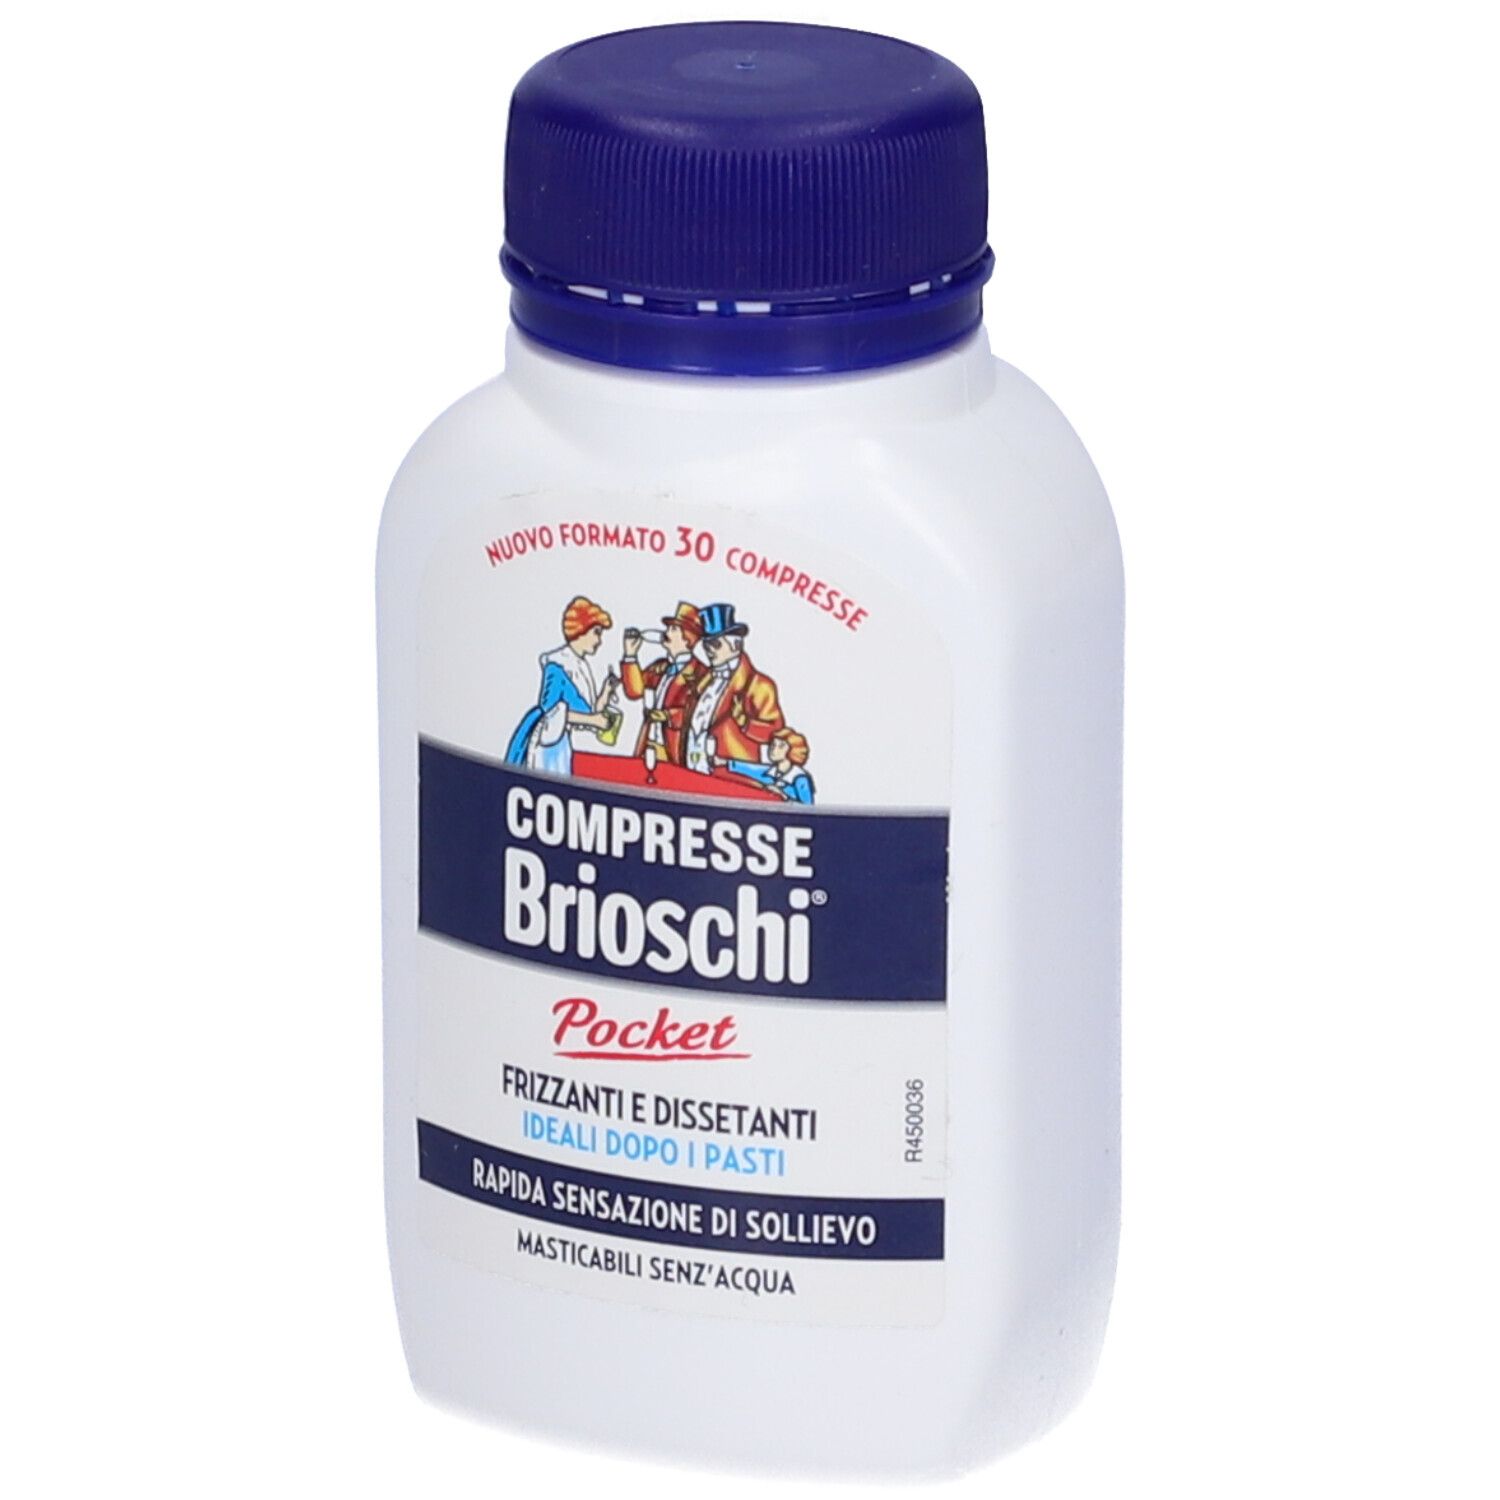 Brioschi® Pocket